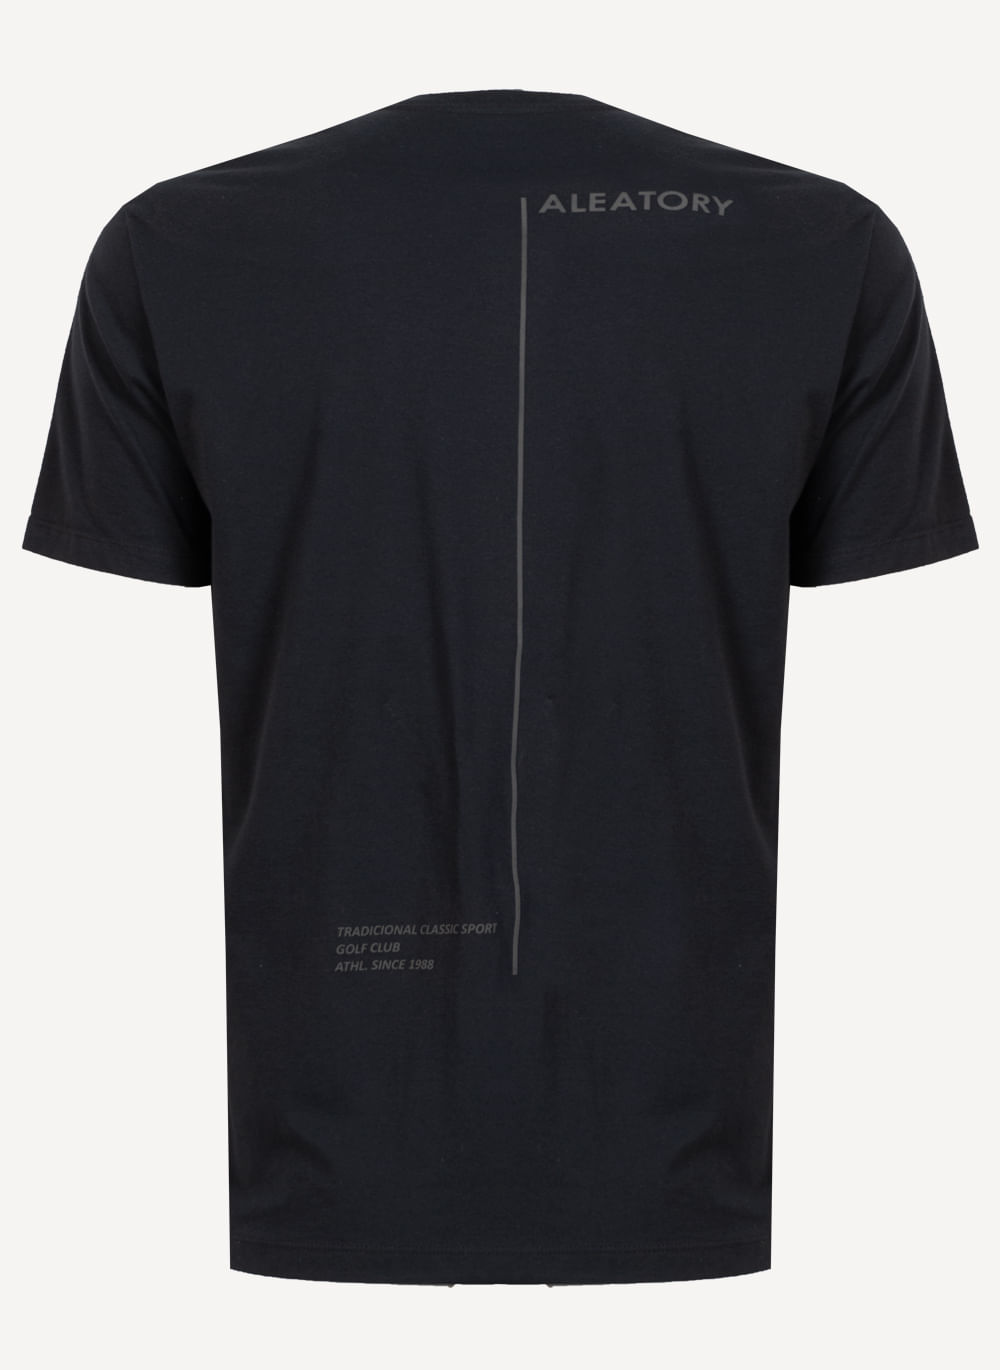 Camiseta-Aleatory-Estampada-Simp-Preta-Preto-P